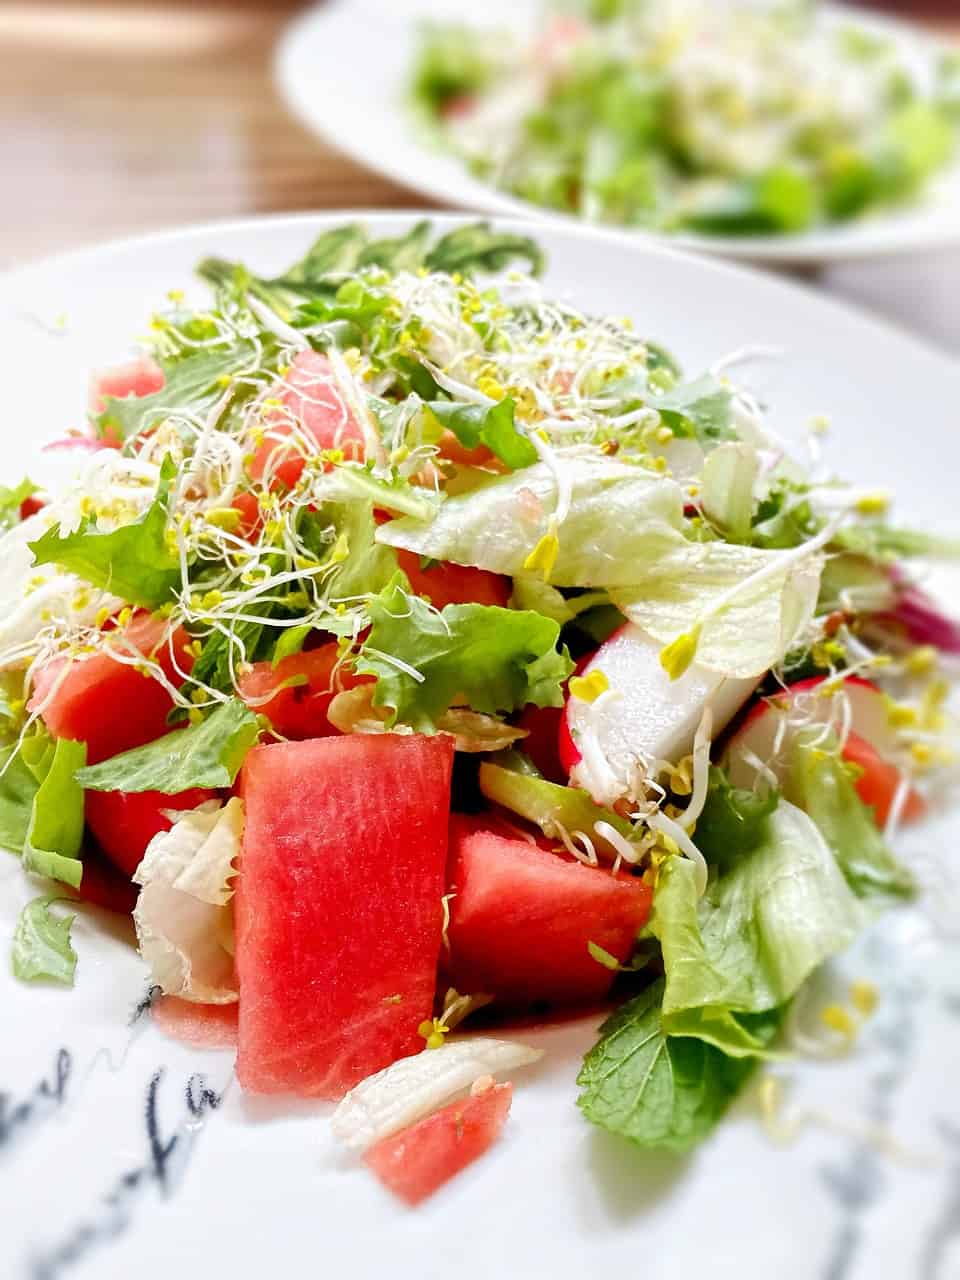 20 Ways To Make A Summer Salad – Recipes